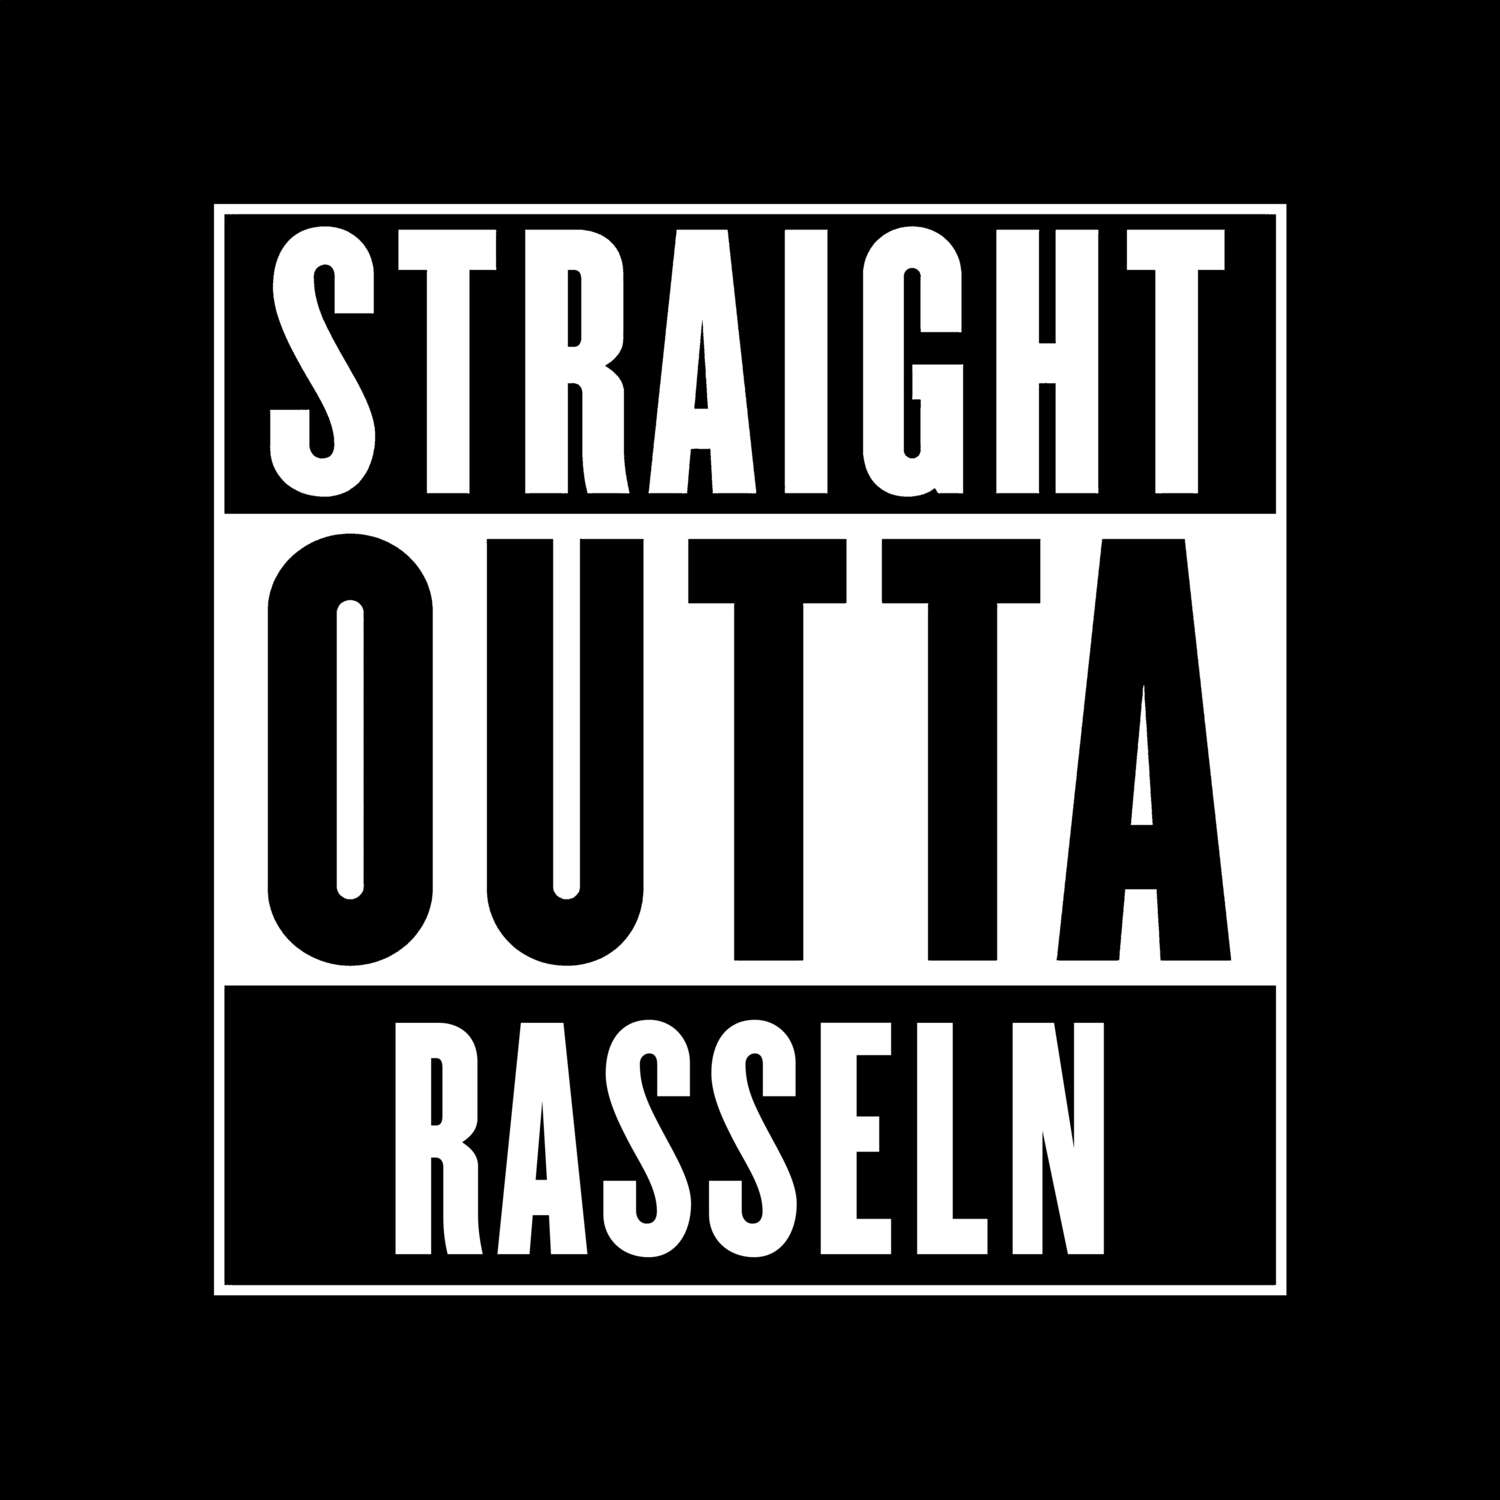 Rasseln T-Shirt »Straight Outta«